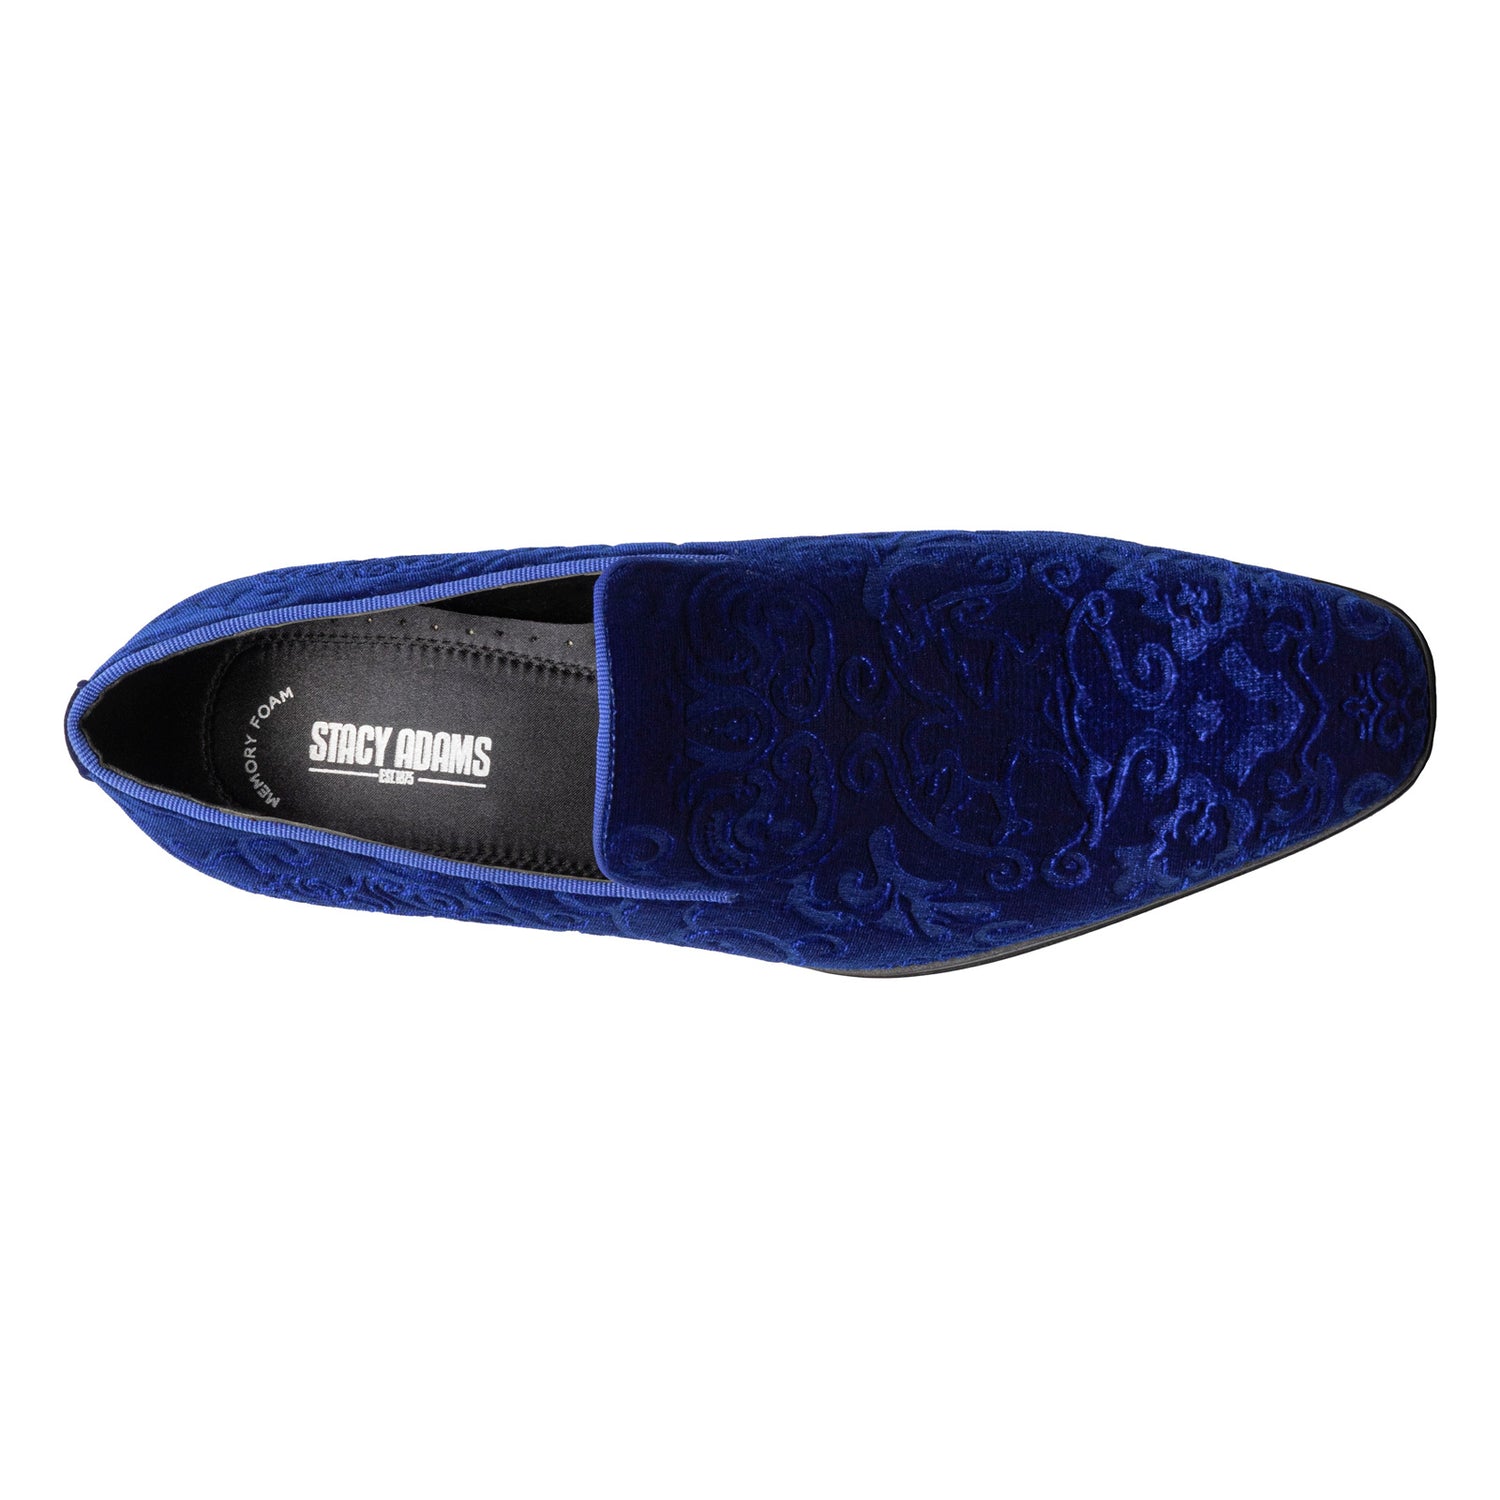 Peltz Shoes  Men's Stacy Adams Saunders Loafer ROYAL 25581-432